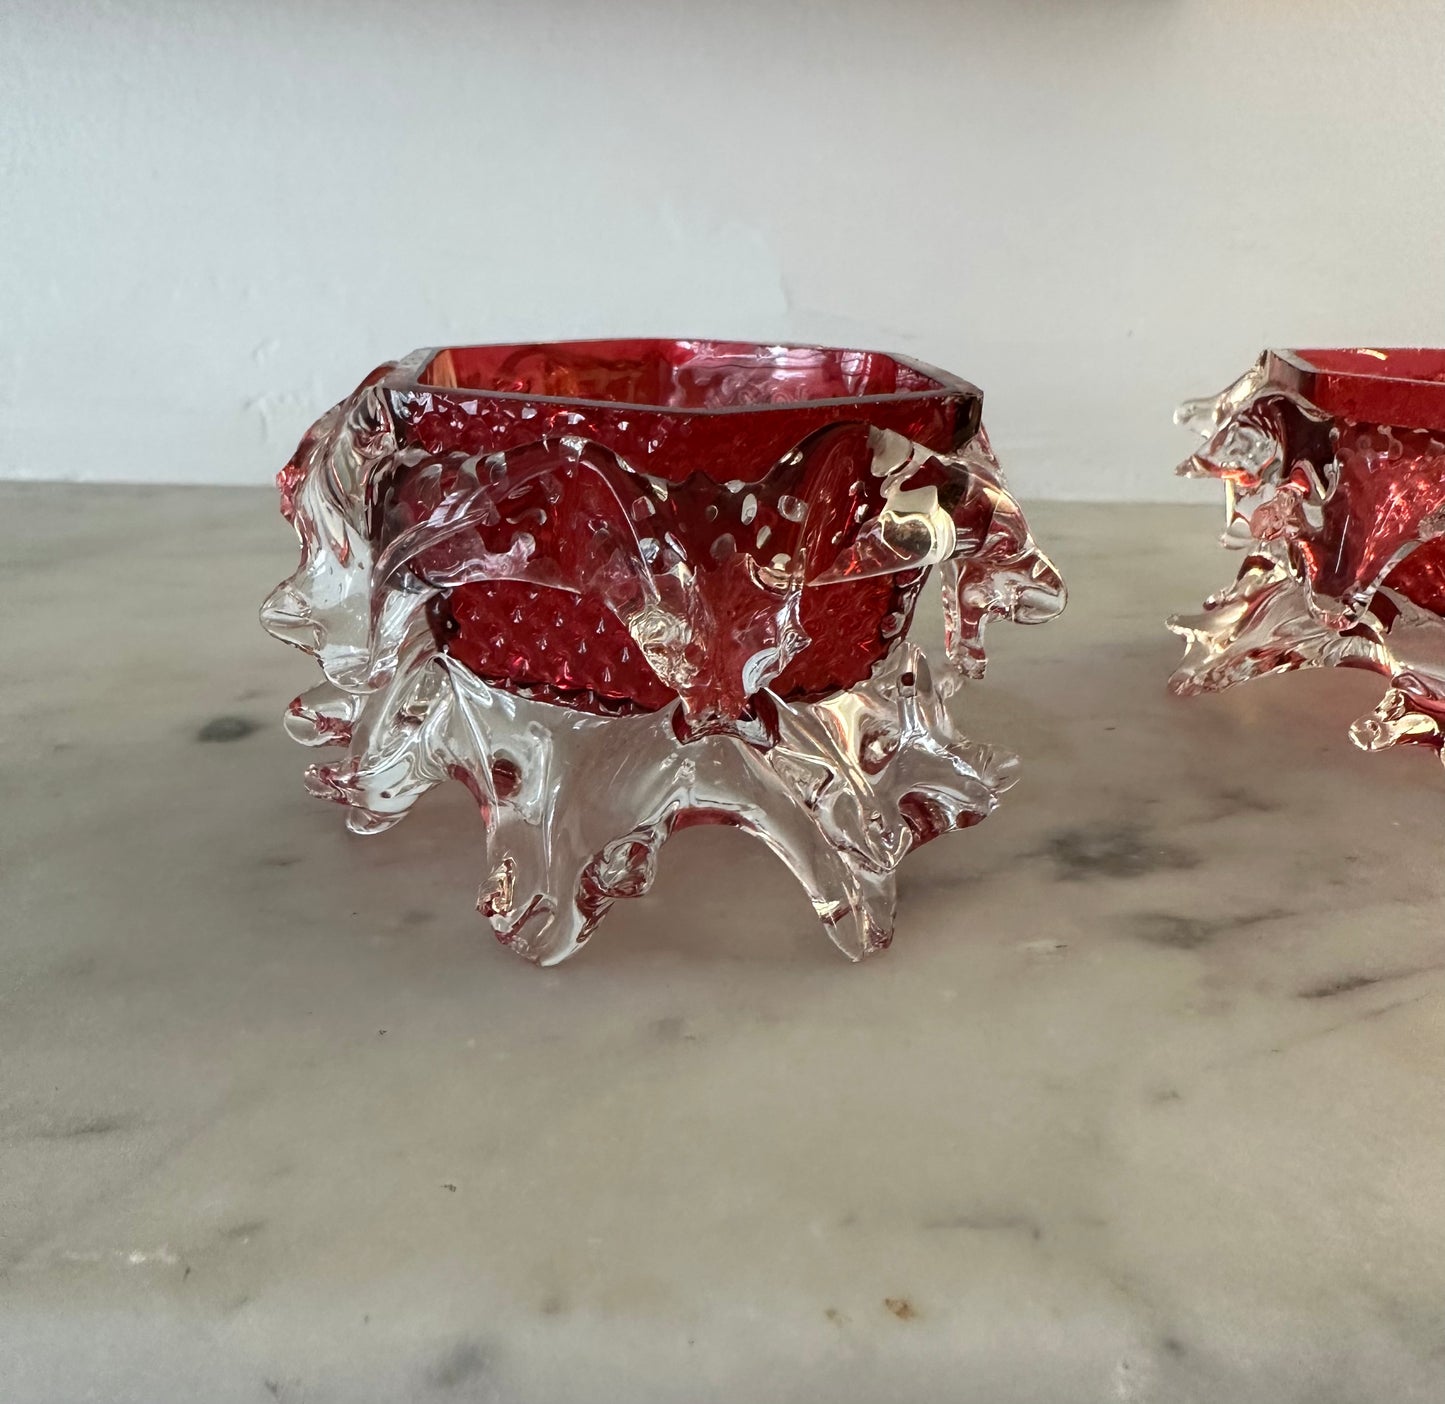 Glass spiky bowls